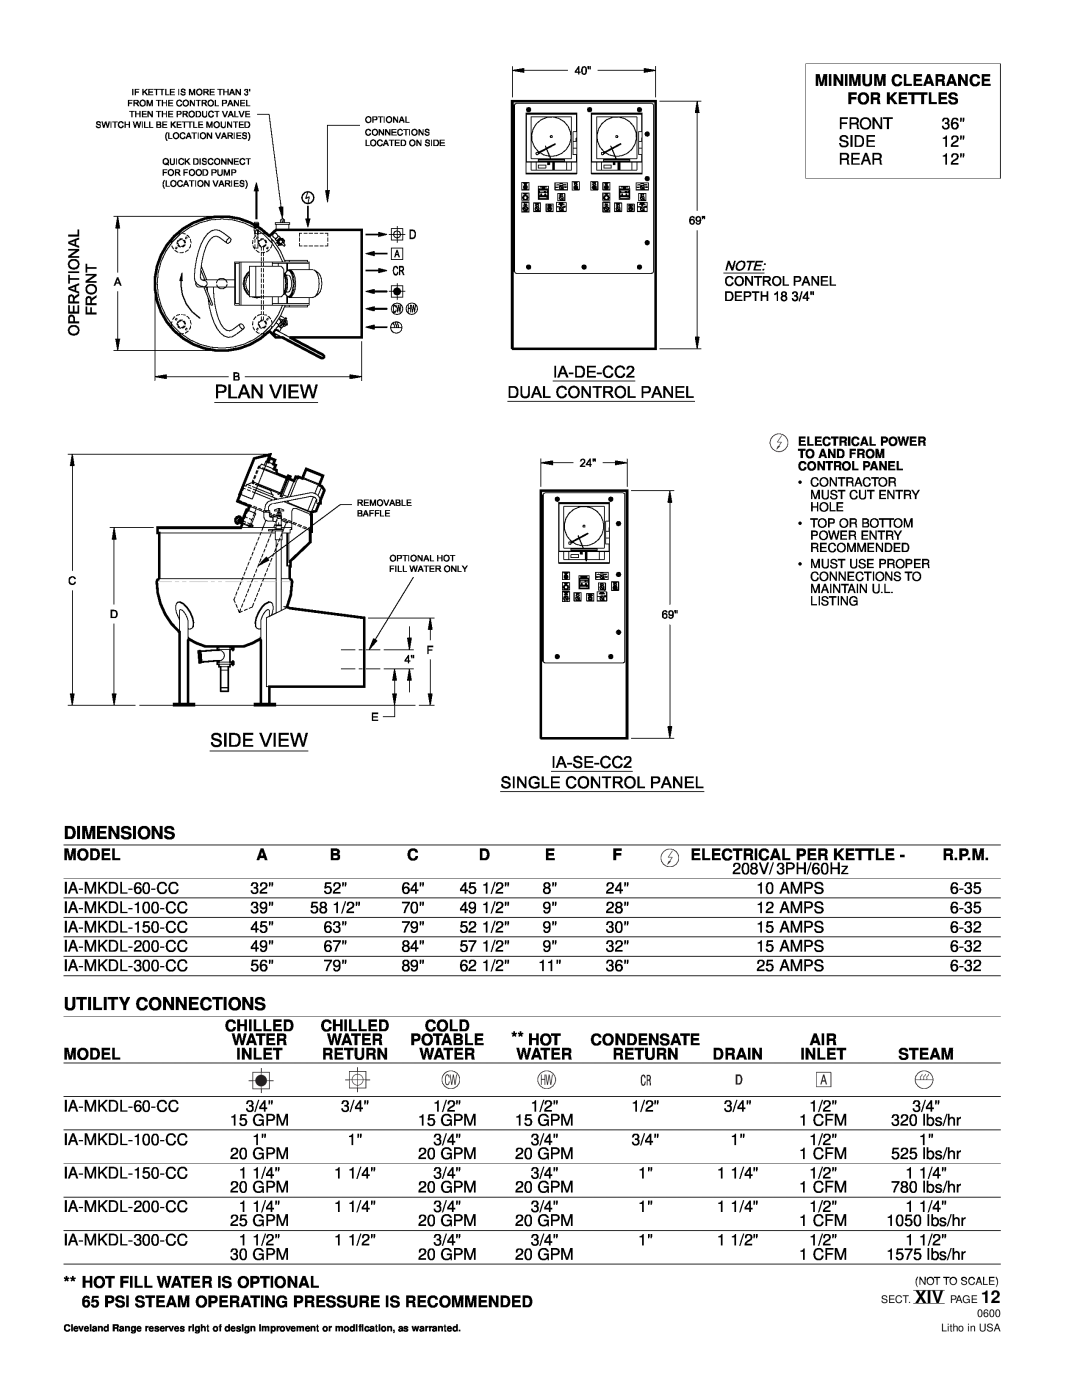 Cleveland Range IA-MKDL-100-CC, IA-MKDL-300-CC, IA-MKDL-60-CC, IA-MKDL-150-CC Rear, Dimensions, Utility Connections 